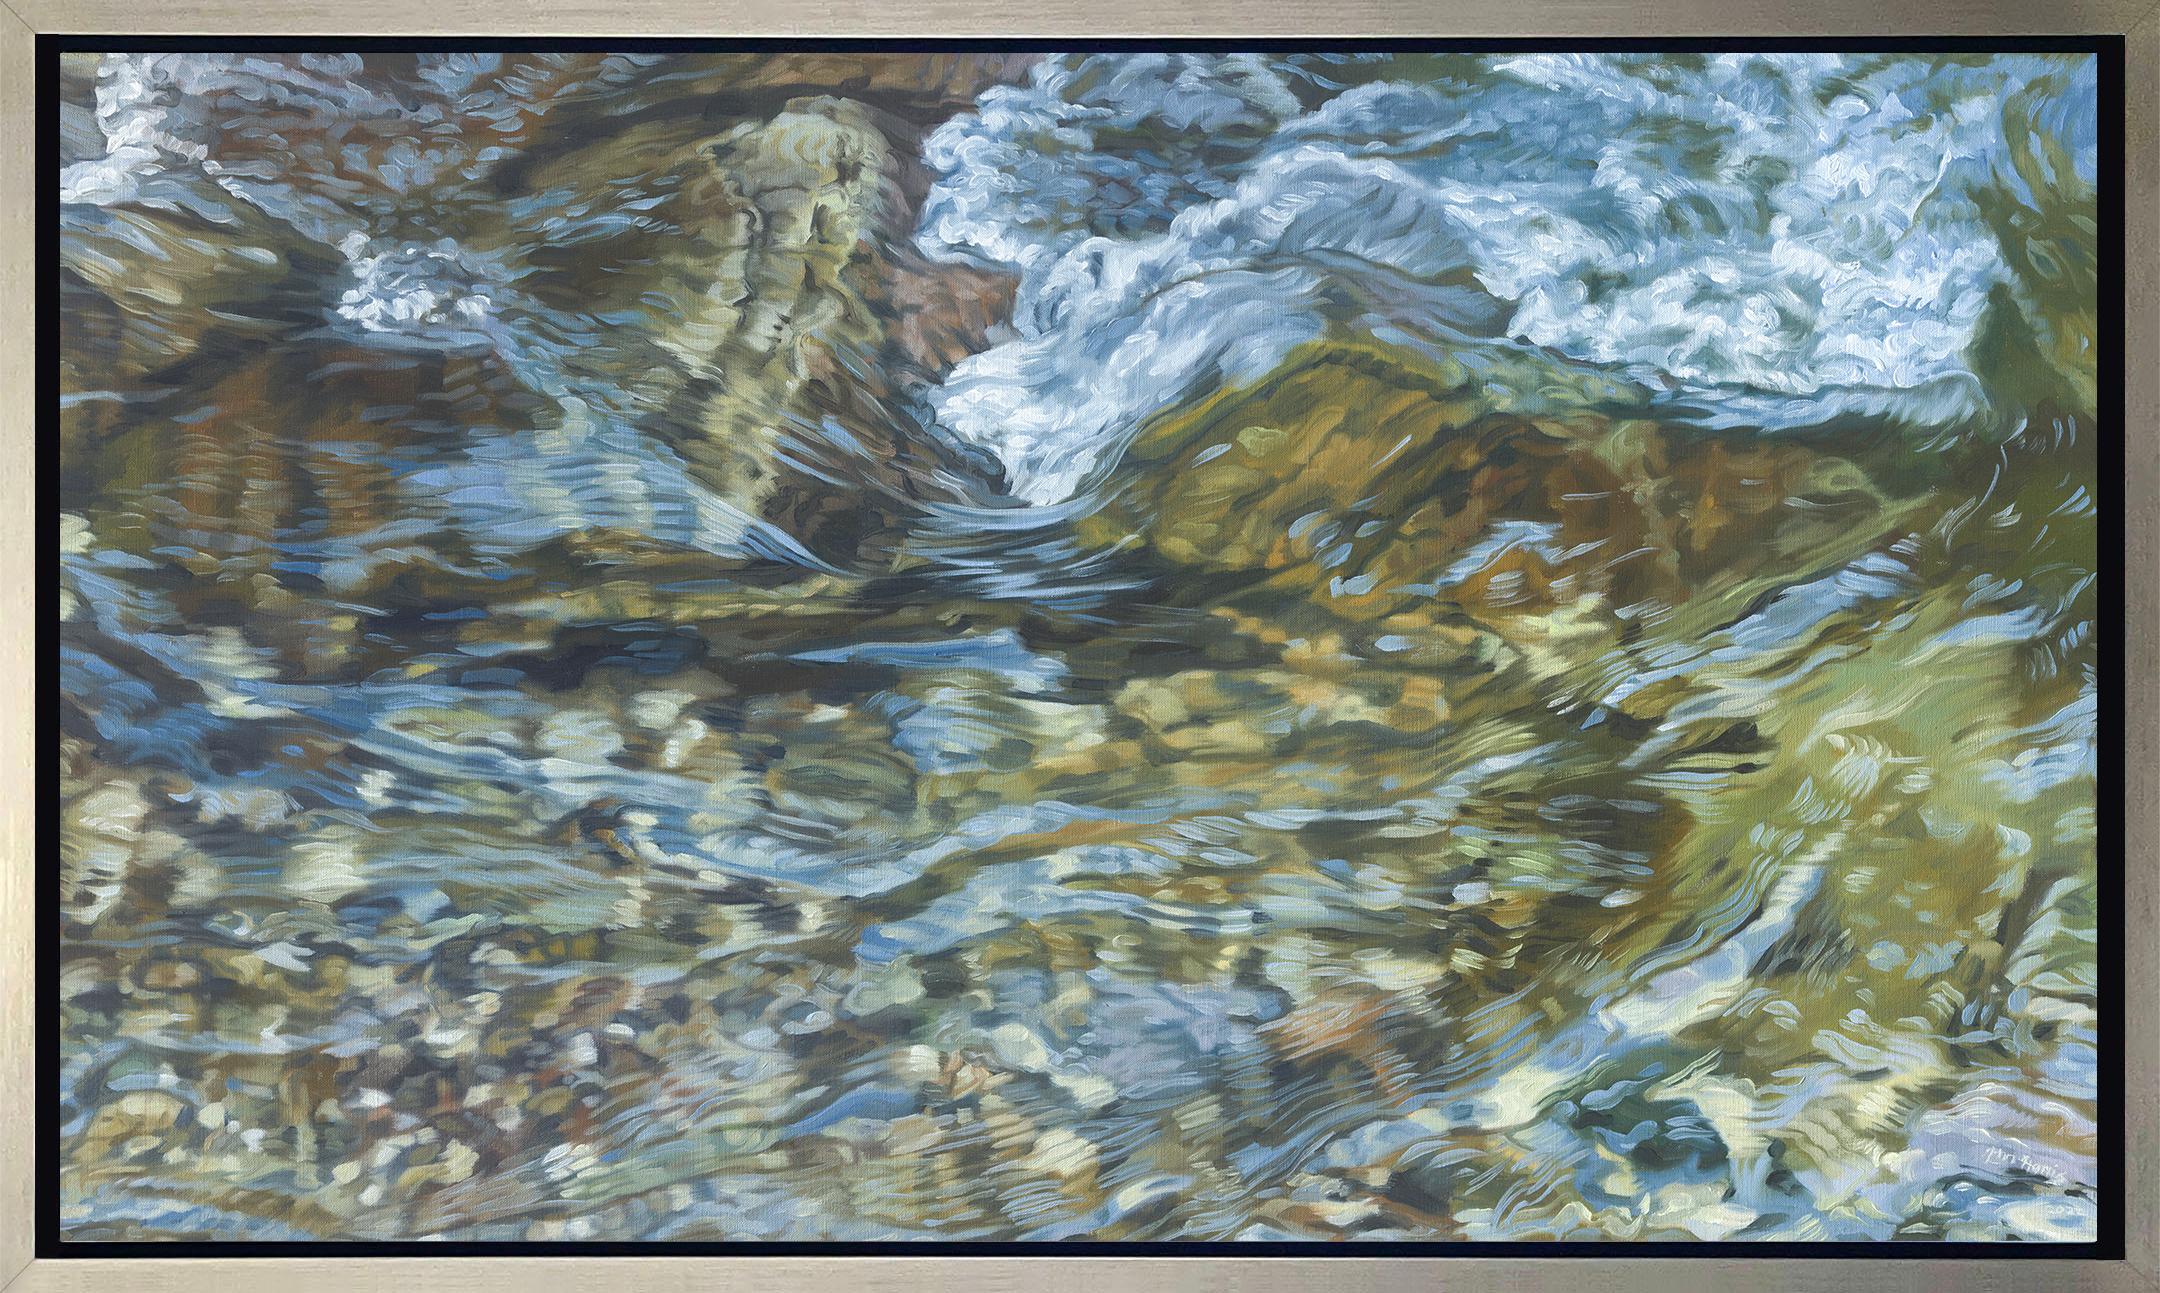 John Harris (painter) Landscape Print - "Streambed III, " Framed Limited Edition Giclee Print, 27" x 45"